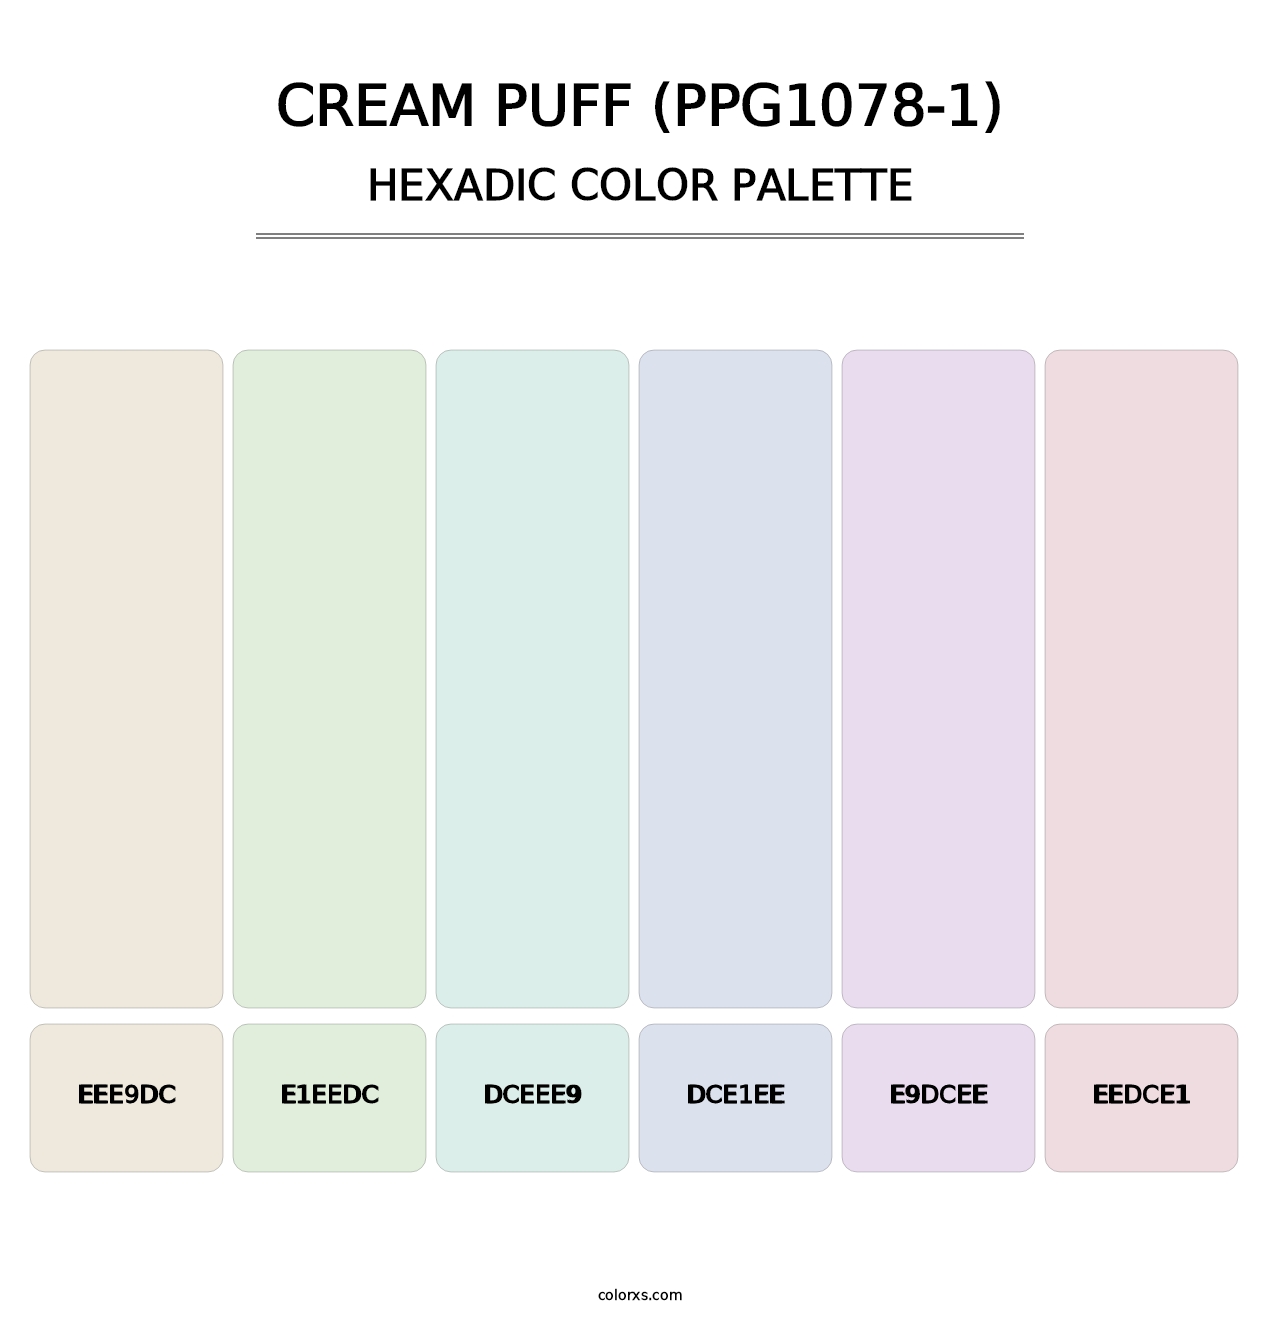 Cream Puff (PPG1078-1) - Hexadic Color Palette